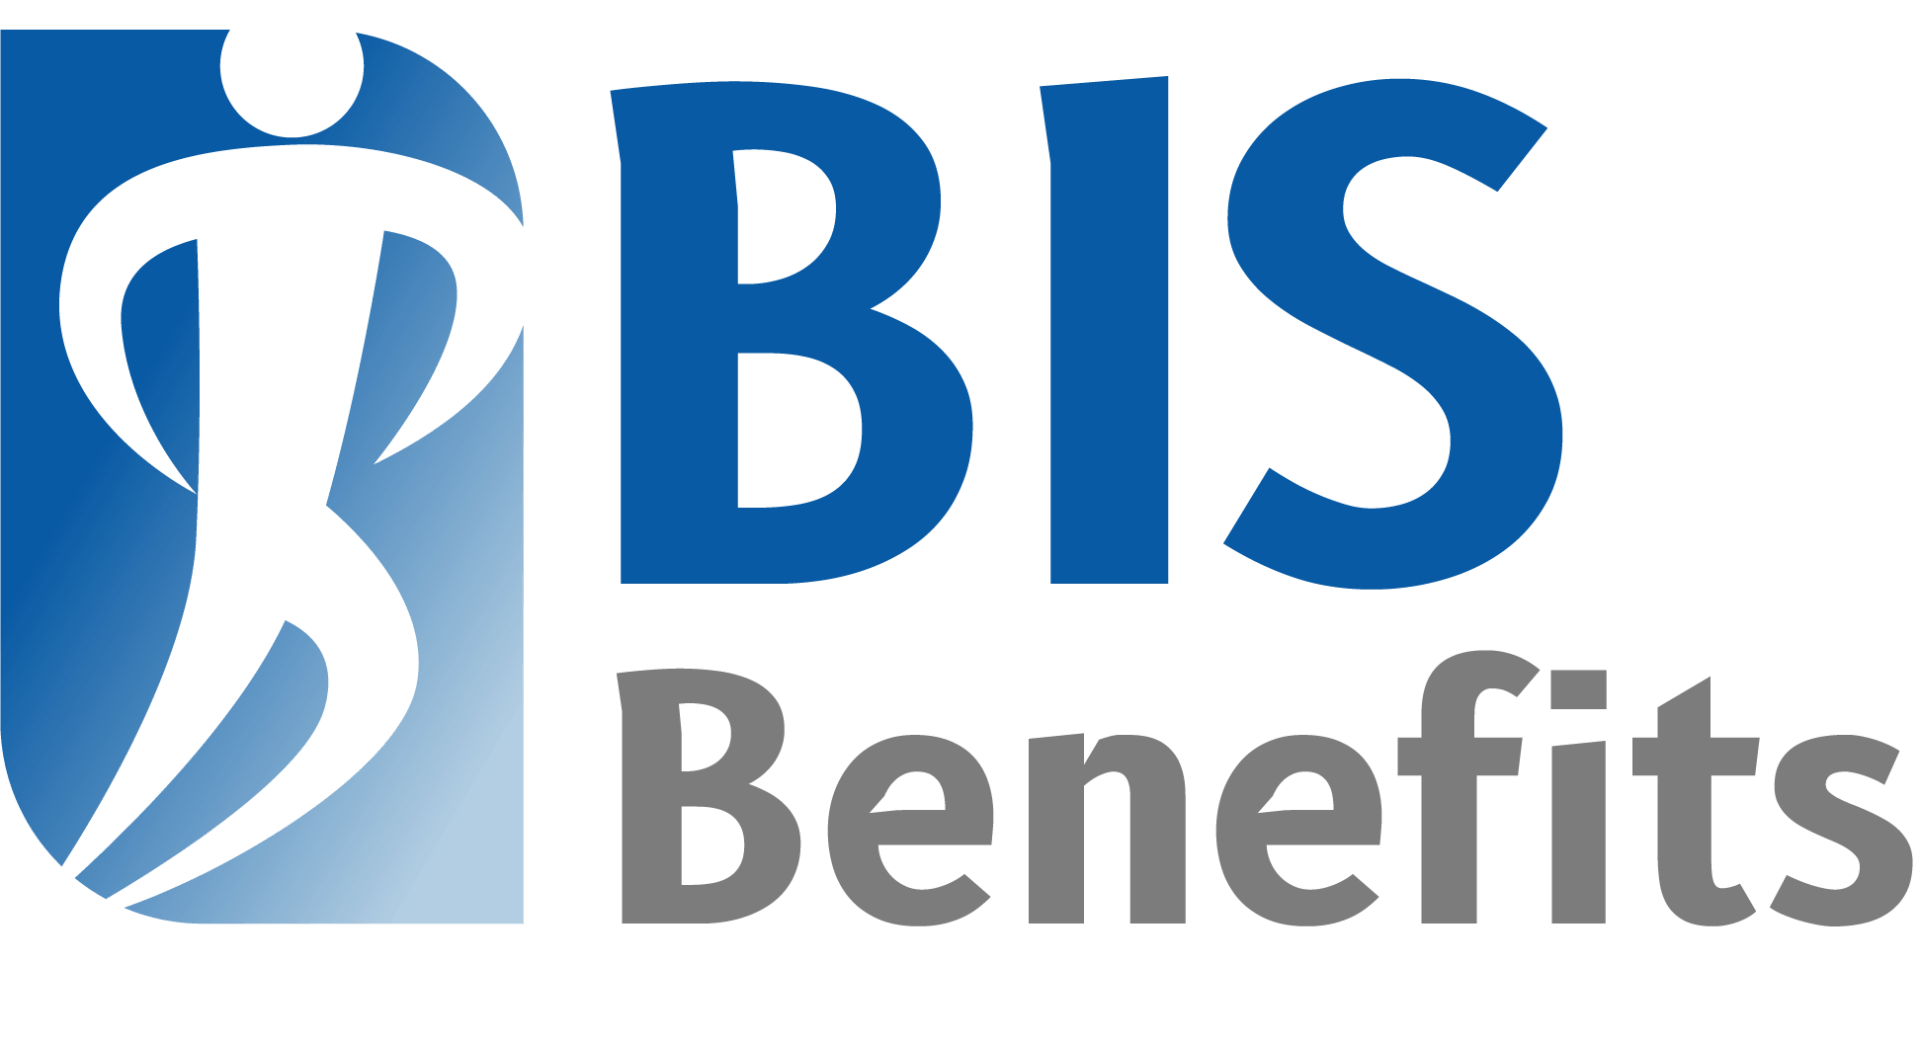 Top Bis Certificate Consultants in Guwahati - बिस सर्टिफिकेट कंसल्टेंट्स,  गुवाहाटी - Best Bis Certification Services - Justdial